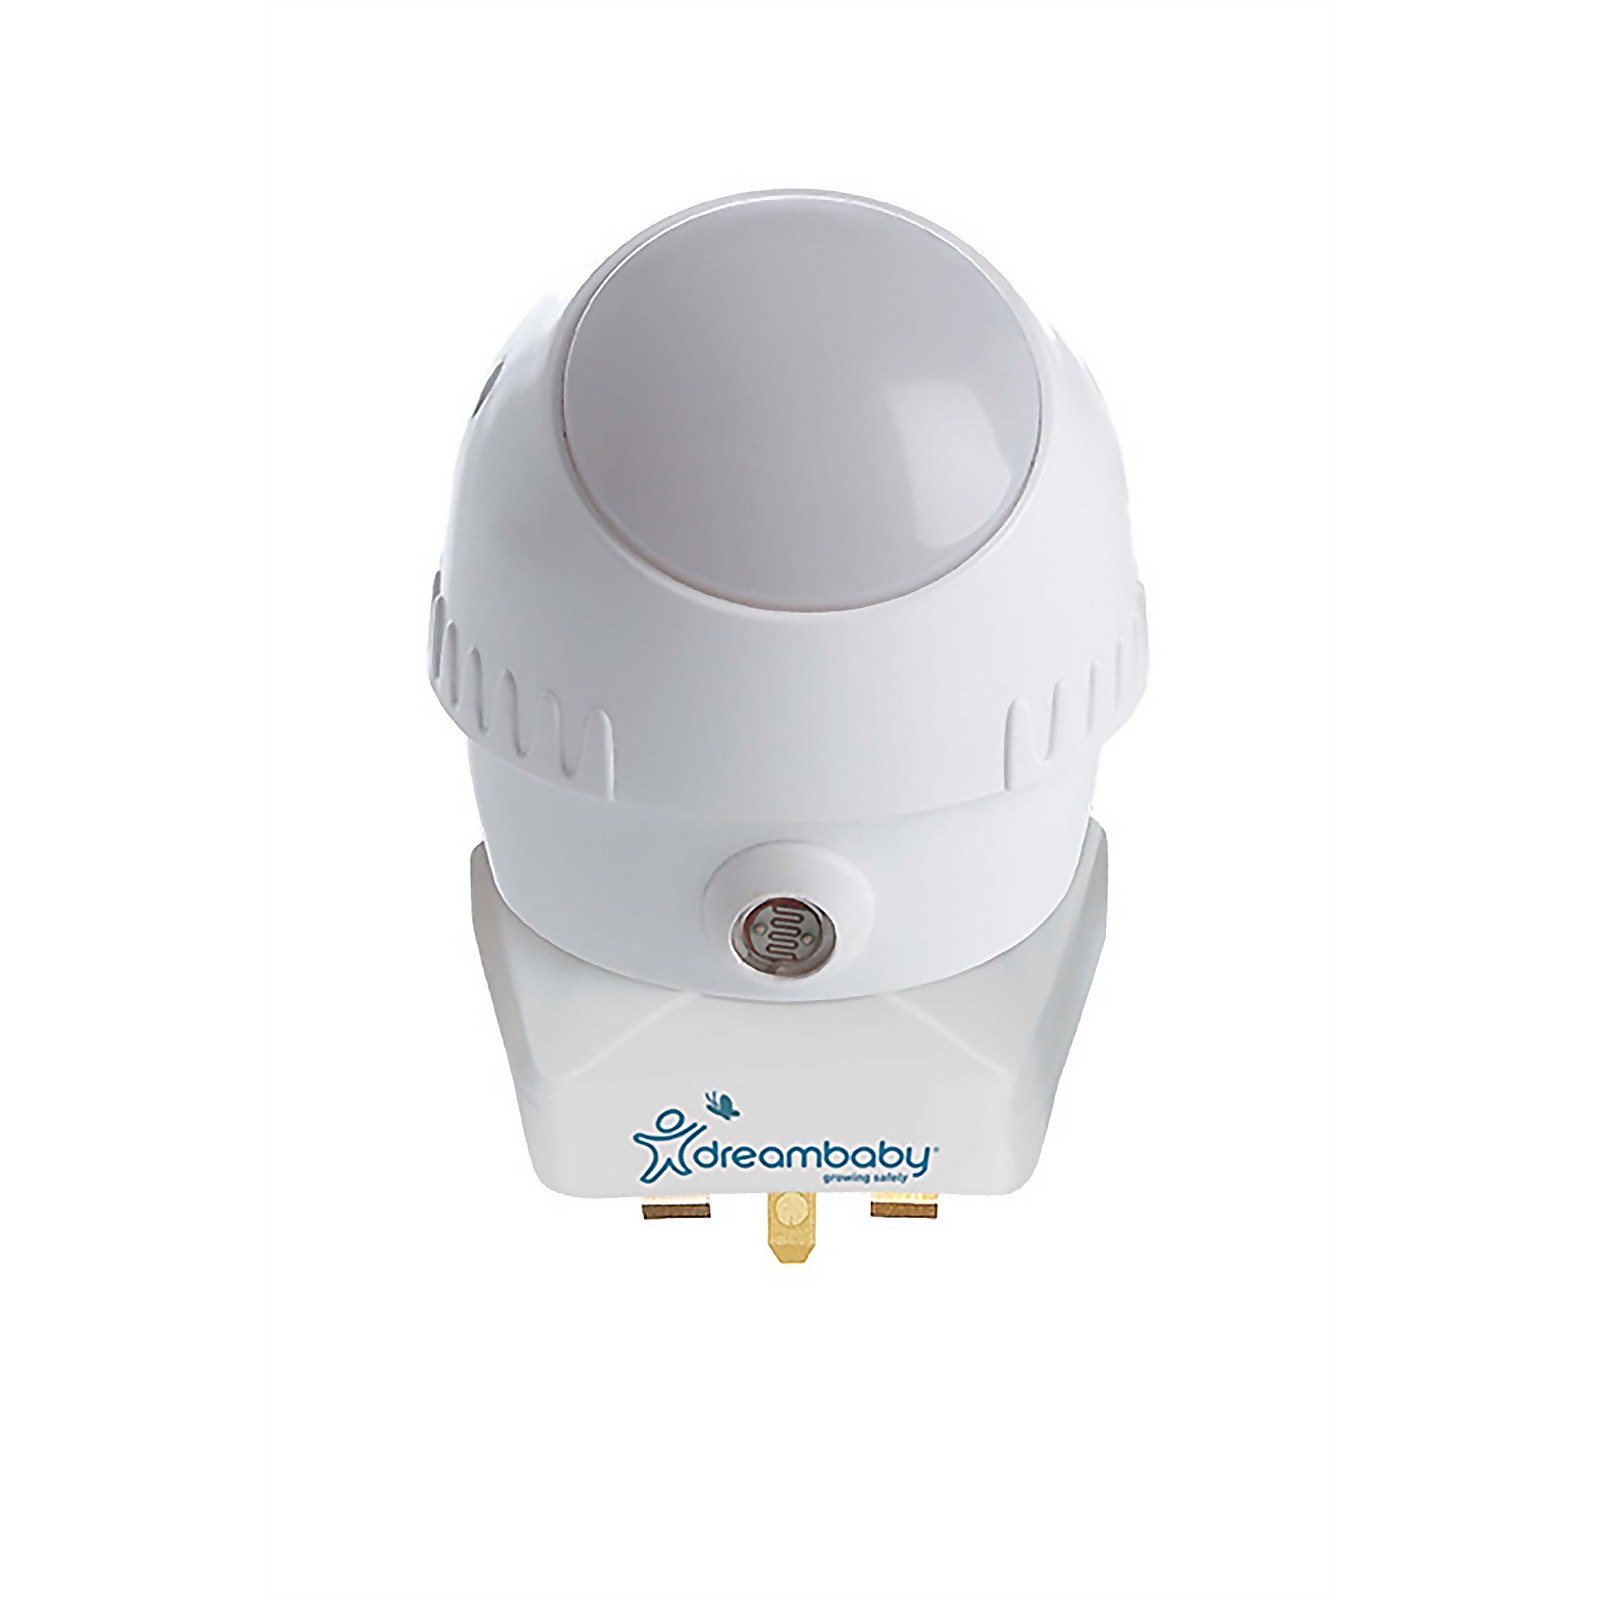 Photo of Dreambaby Auto-sensor Swivel Led Night Light - White